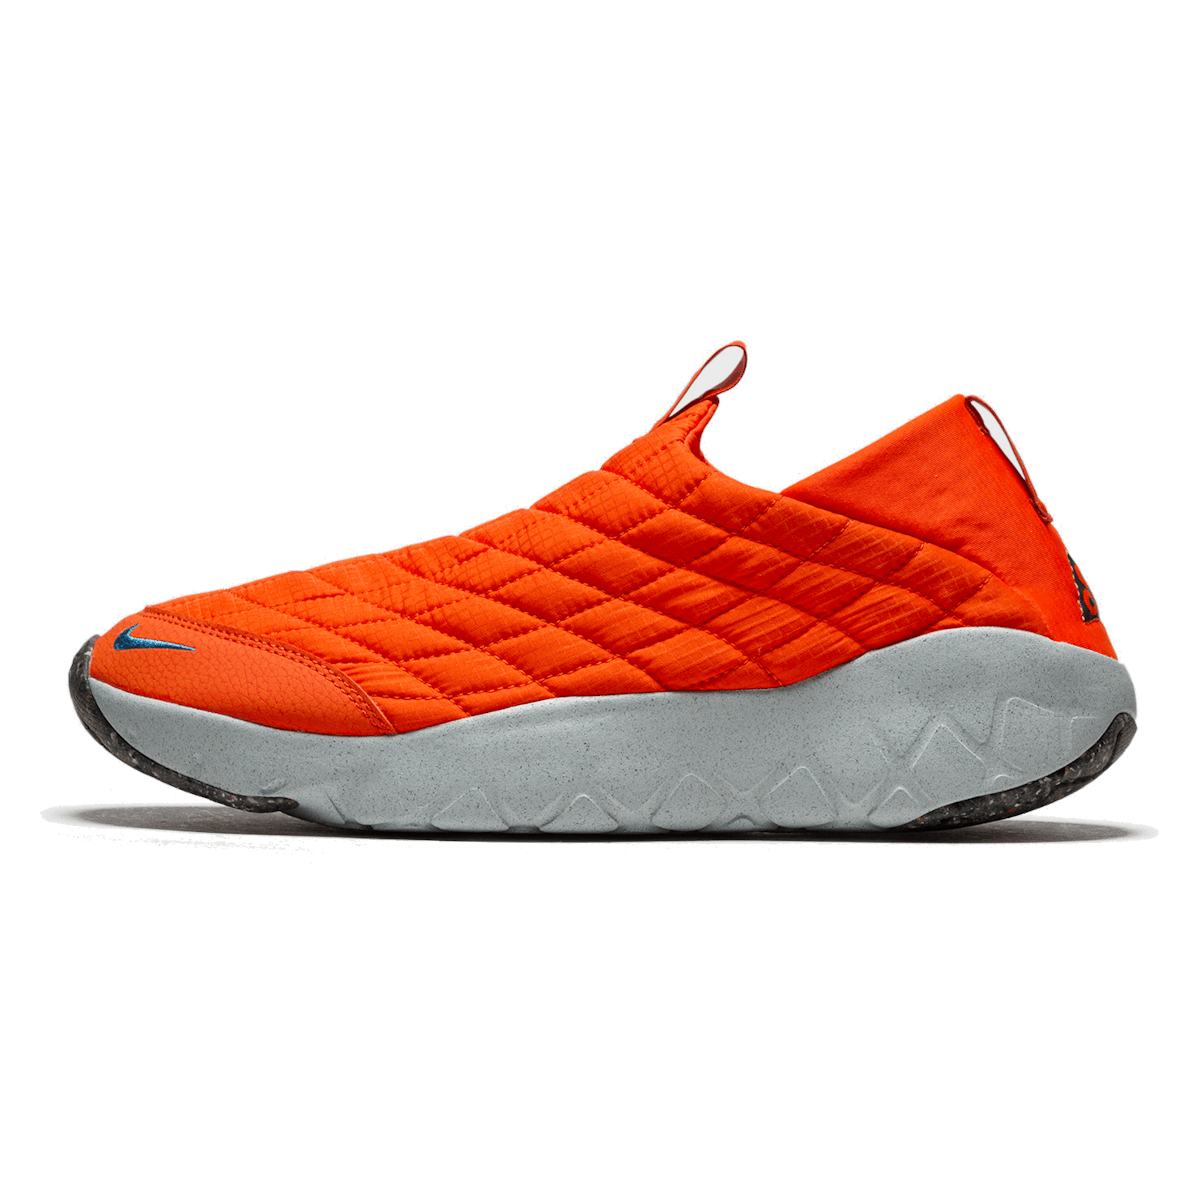 Nike ACG Moc 3.5 Rush Orange